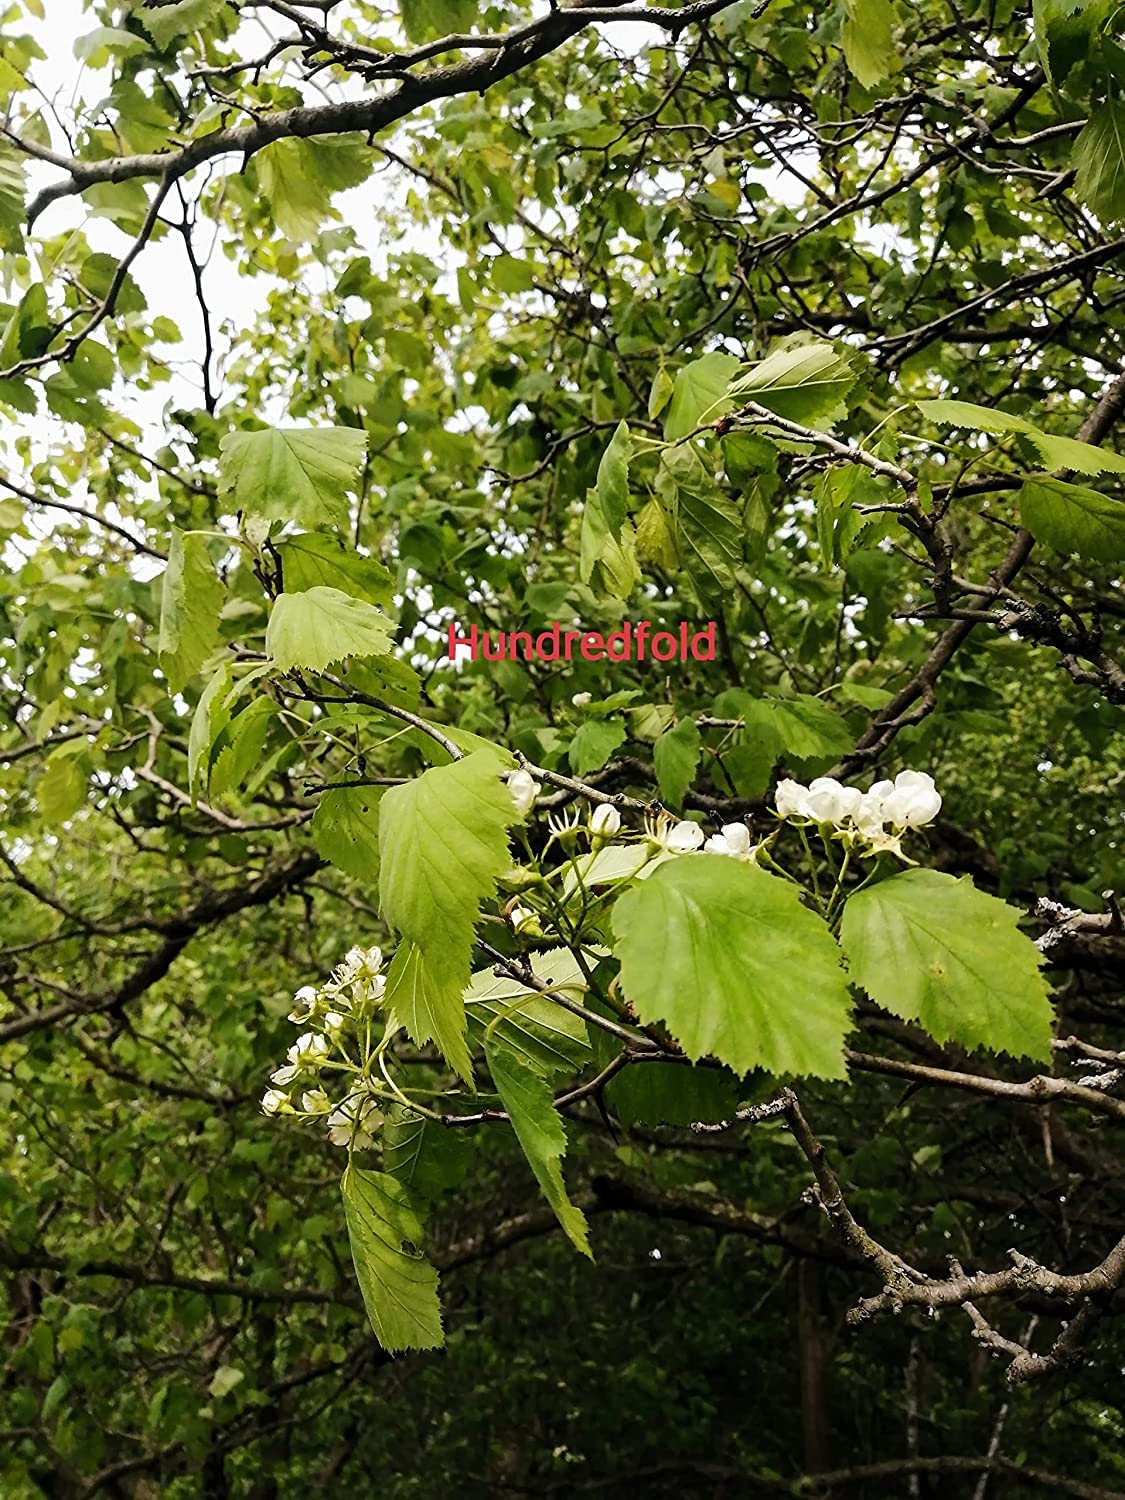 Hundredfold Downy Hawthorn 20 Seeds – Crataegus mollis Red Haw Thorn Canada Native Small Fruit Tree, Perfect for Backyard Birding & Hedgerow Hedge Row